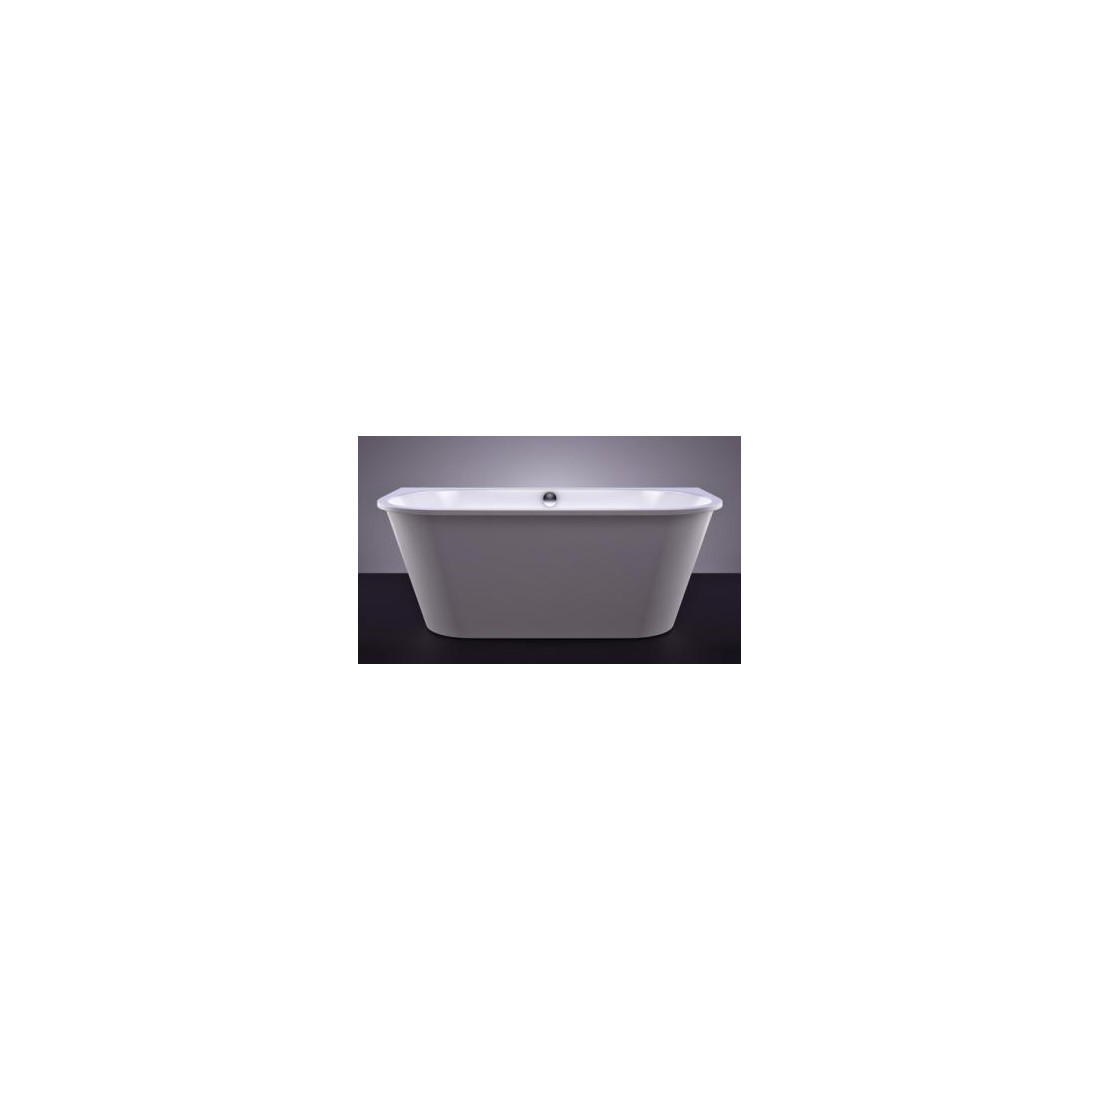 Akmens masės vonia VISPOOL EVENTO 175x75 apvalinti du kampai balta